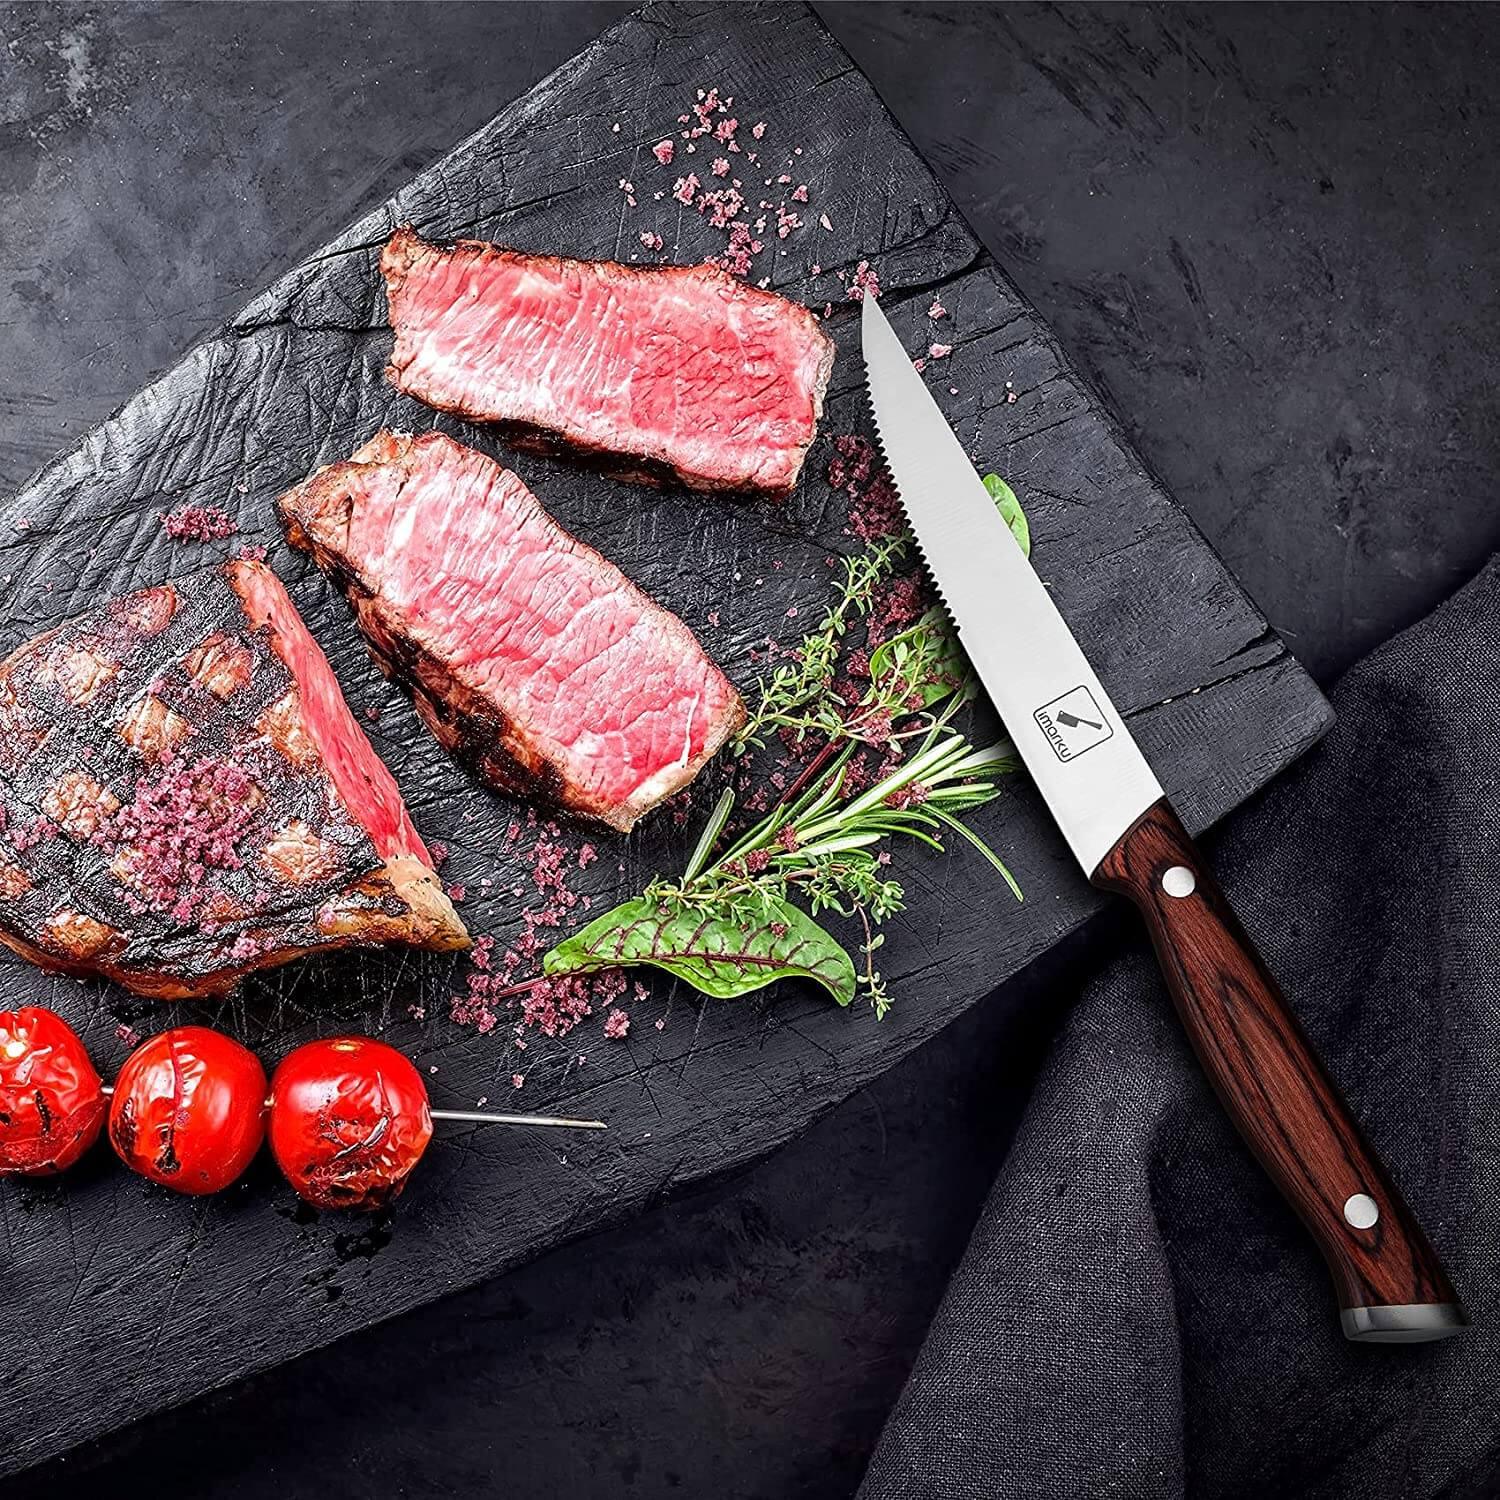 Kitchen Knives Gift Set - 4 Serrated Steak Knives 5' Set in Wooden